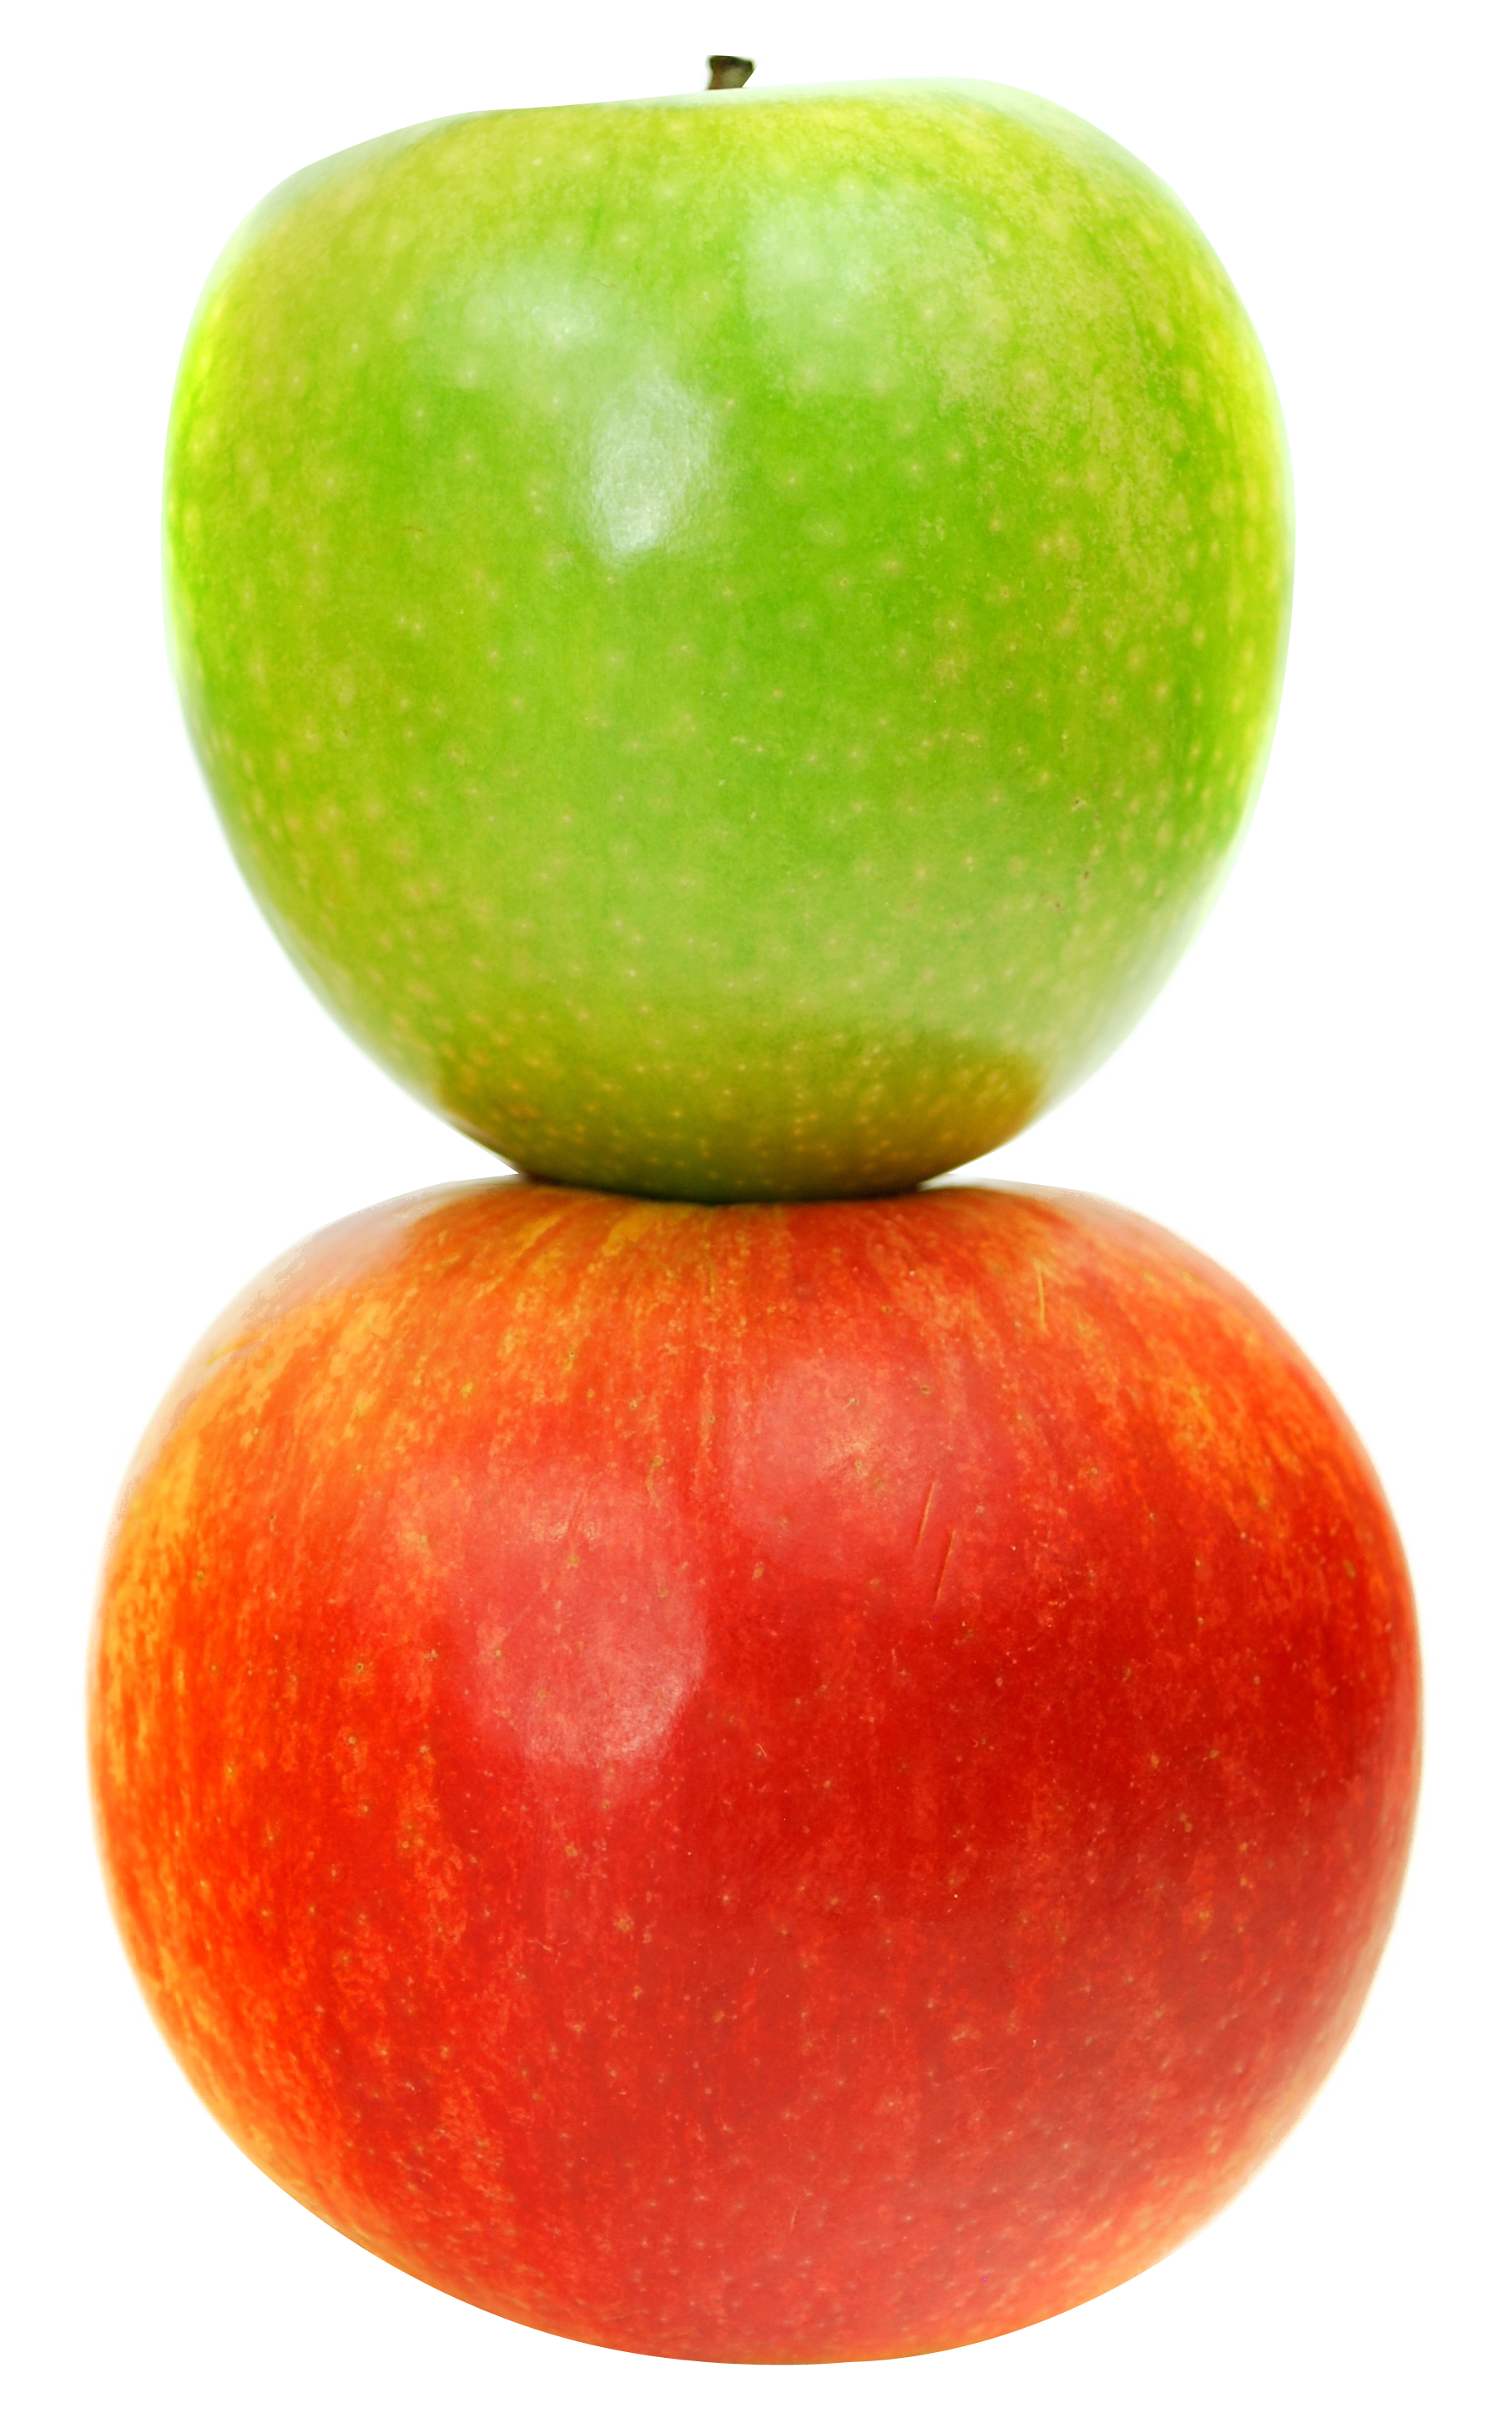 Double  Apples